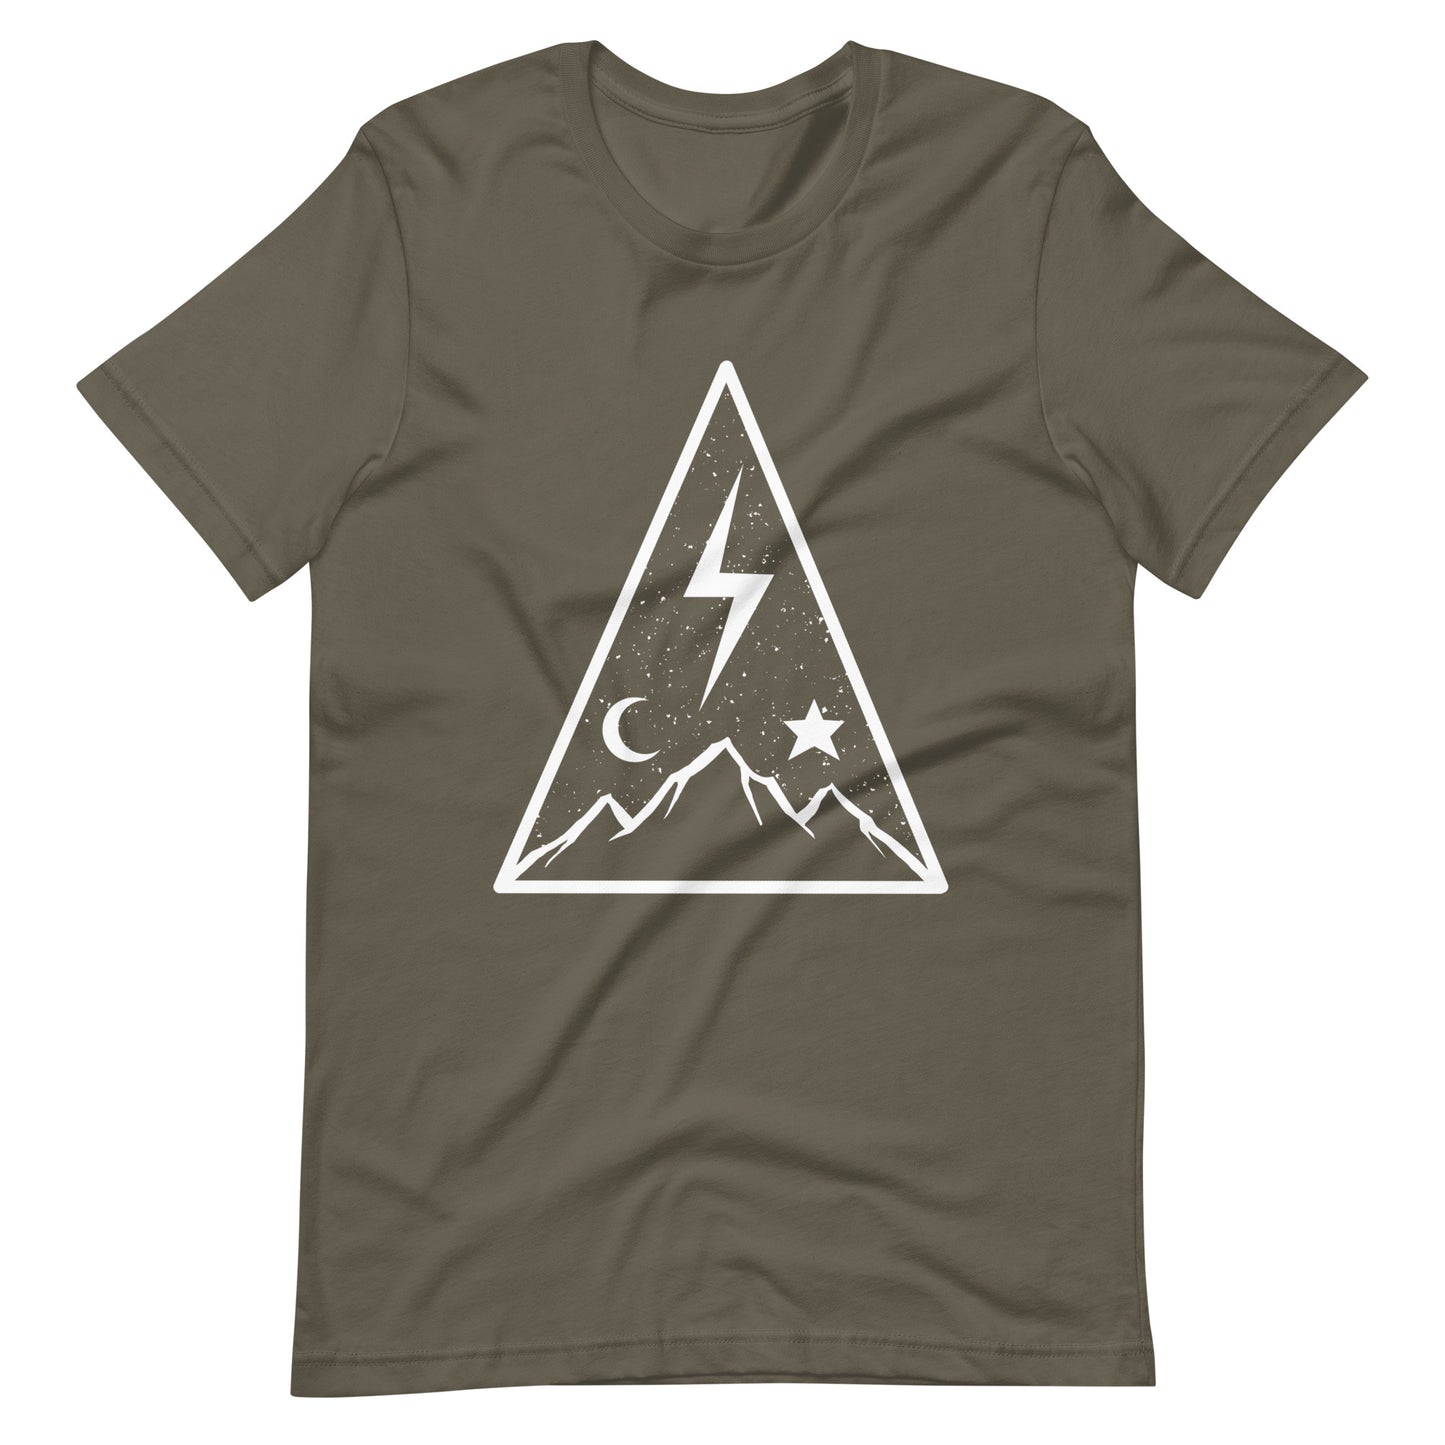 Coalesce - Men's t-shirt - Army Front